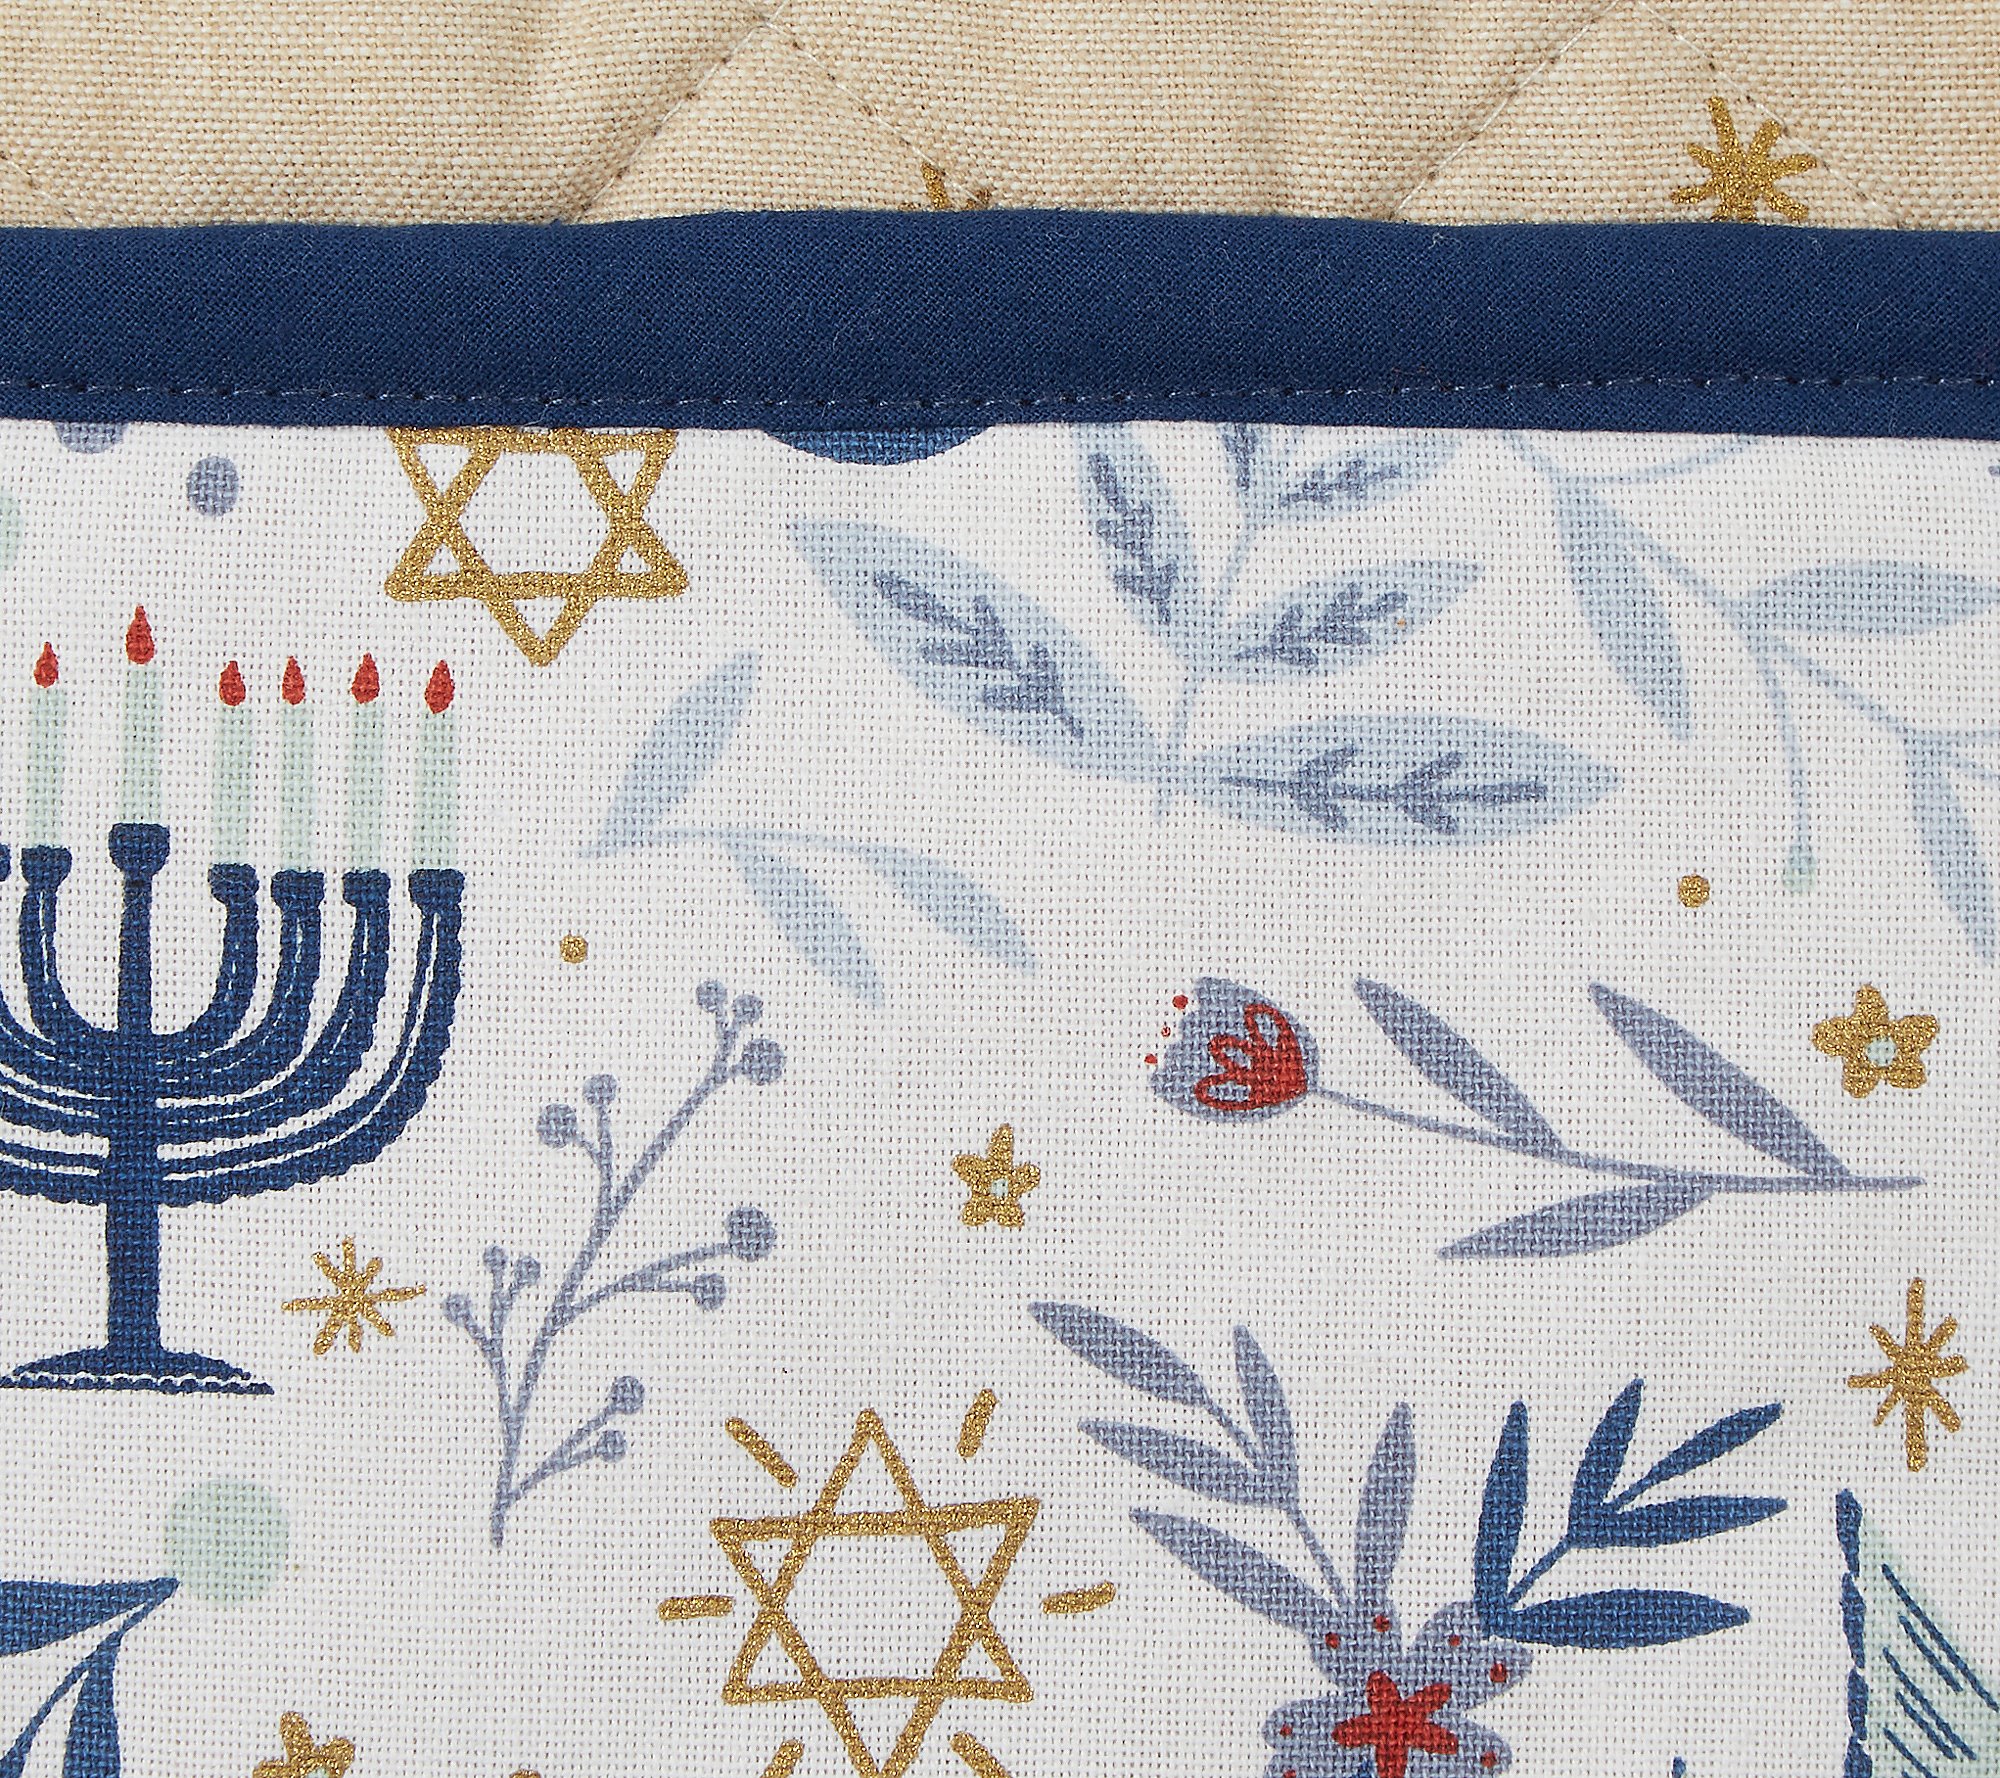 Design Imports Hanukkah Towel and Potholder Gift Set